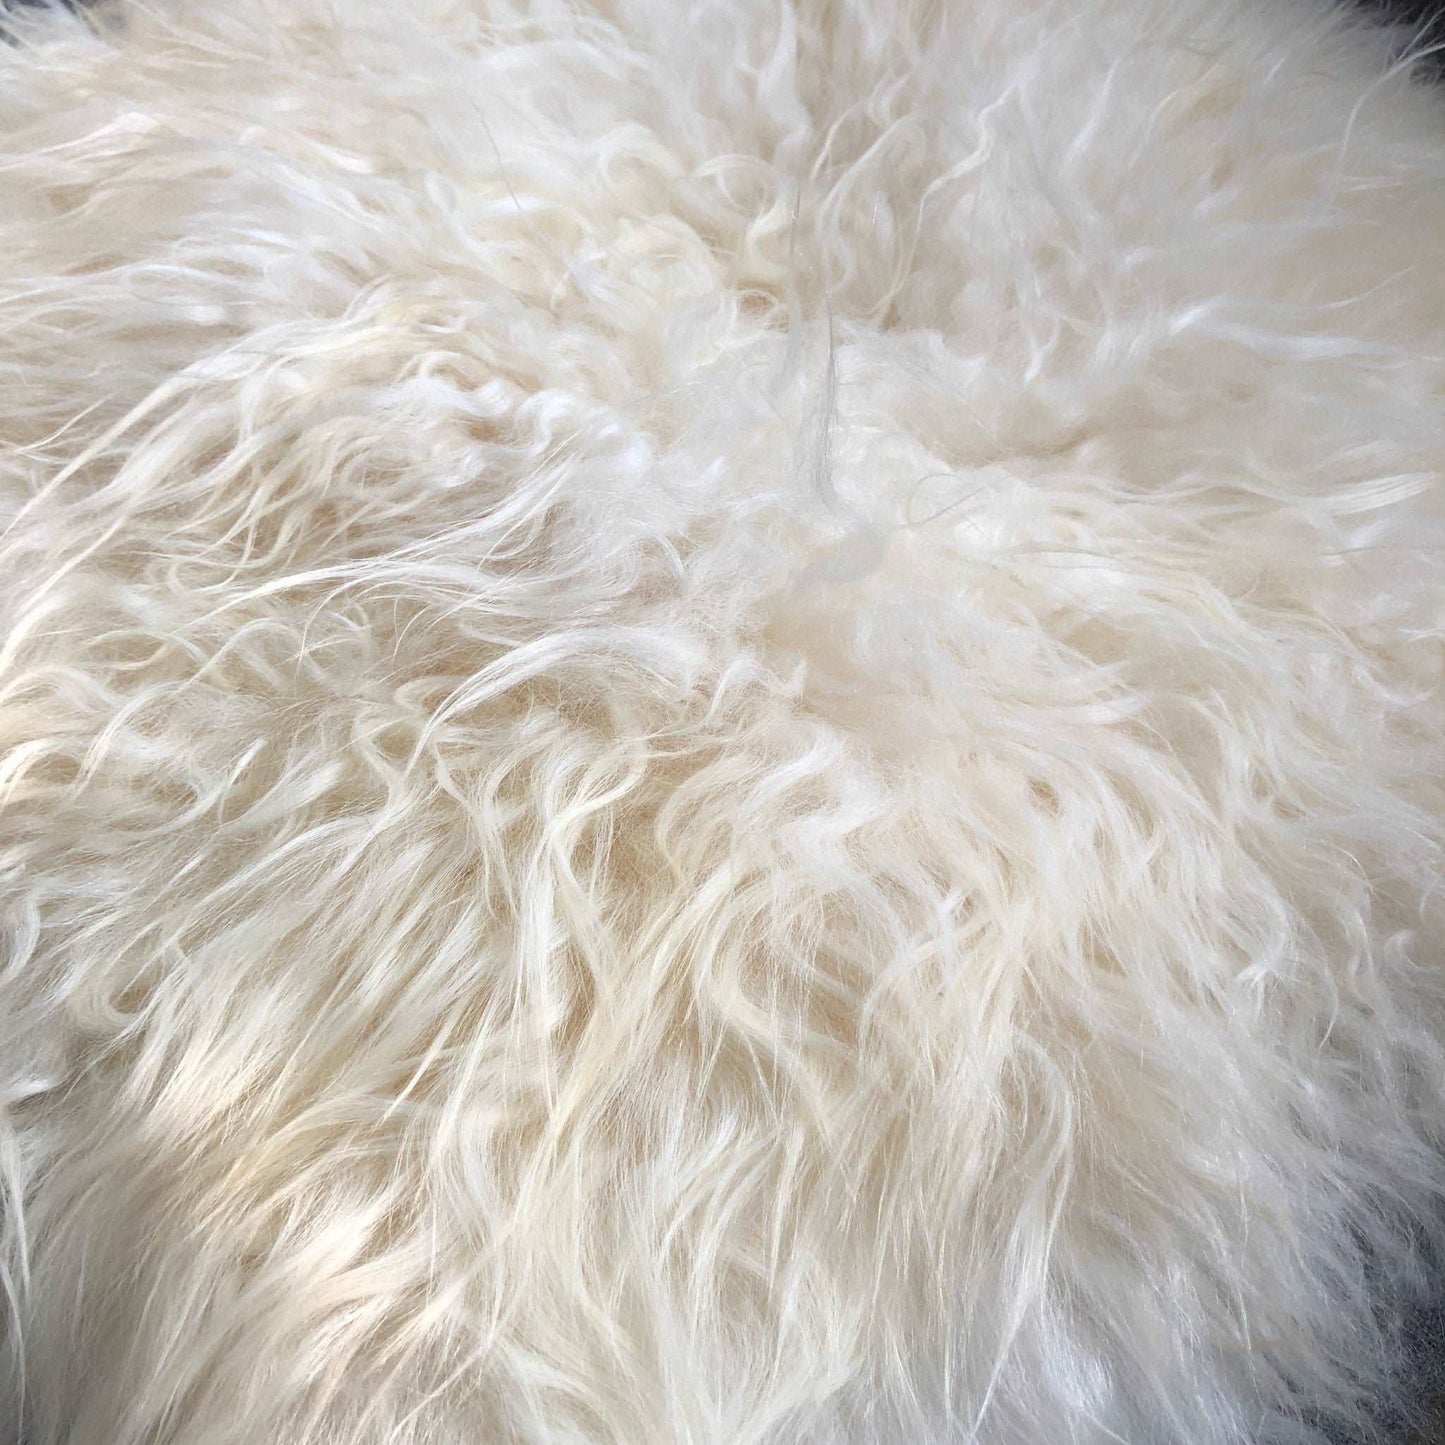 British Curly Sheepskin Seat Cover Ivory Cream White ::: Square 37cm - Wildash London